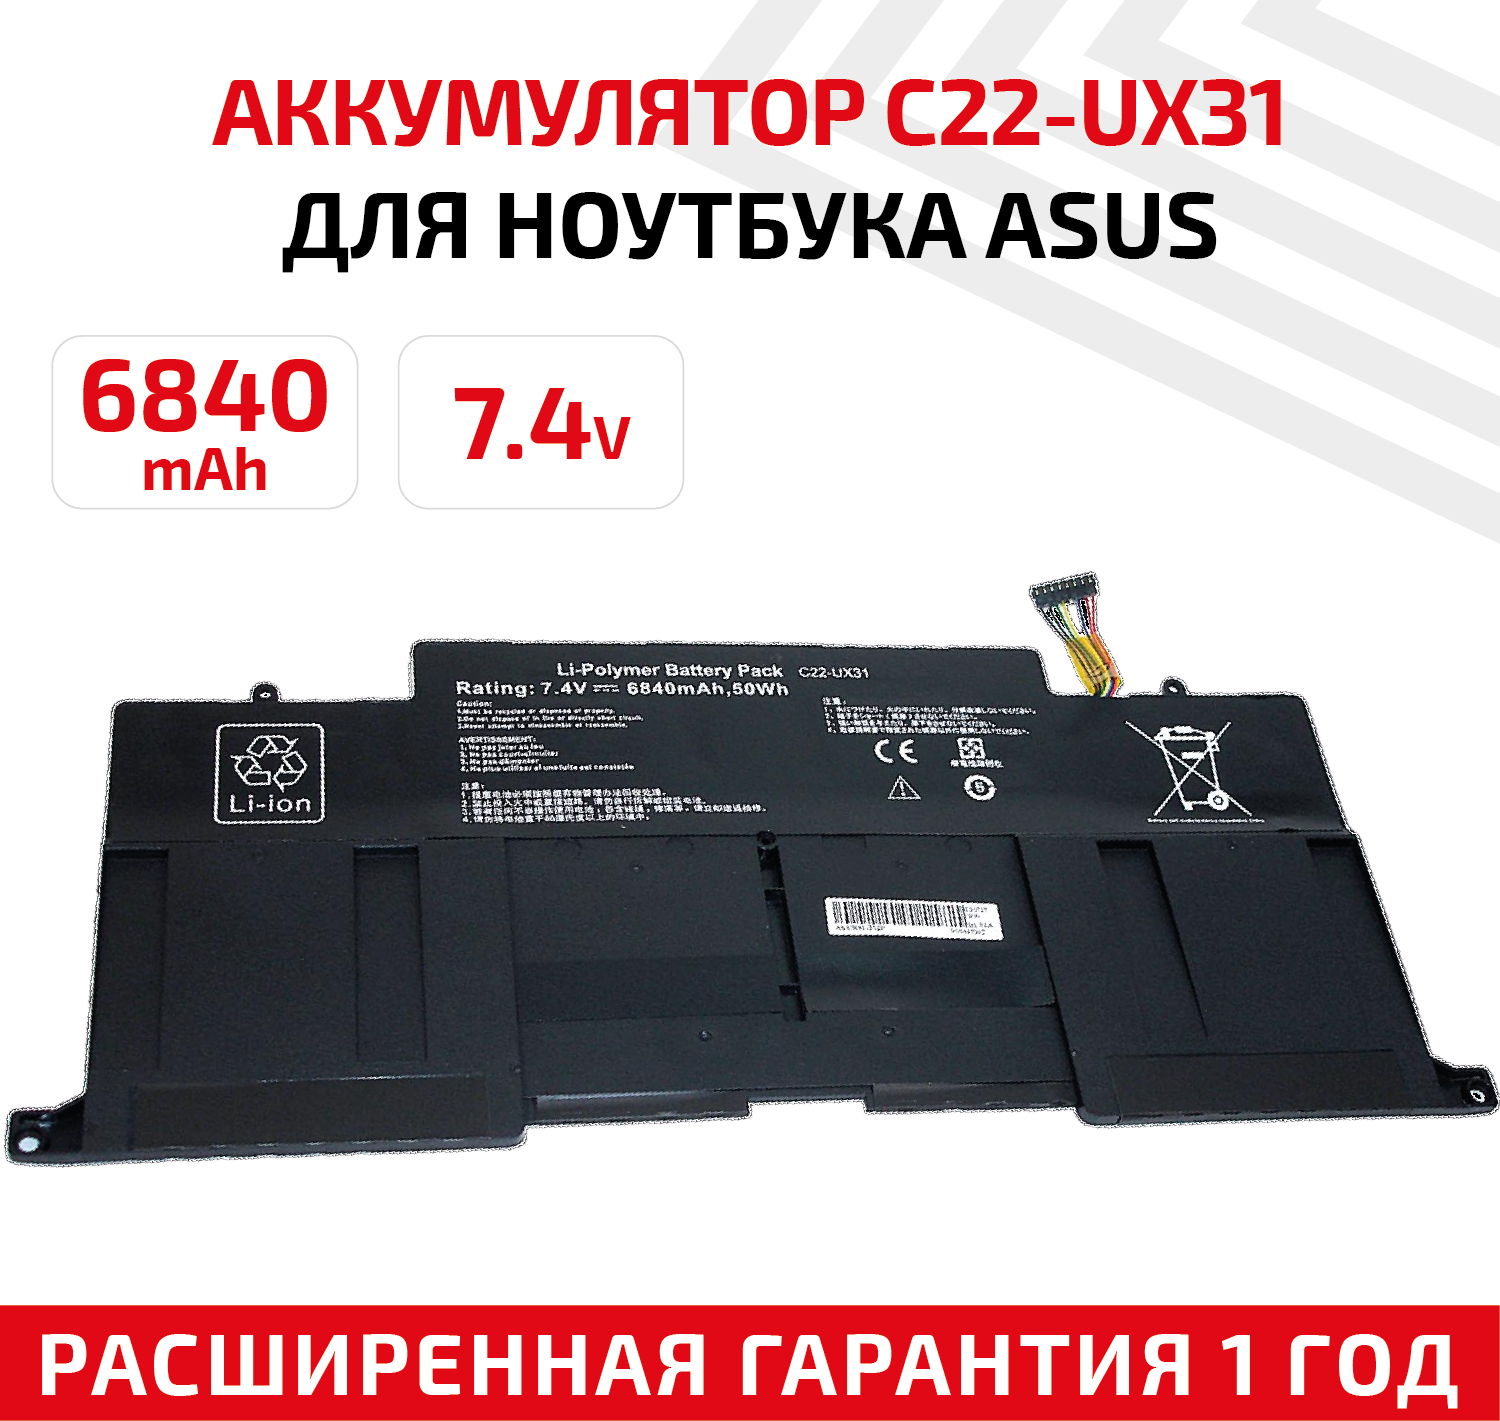 Аккумулятор (АКБ, аккумуляторная батарея) C22-UX31 для ноутбука Asus UX31-2S2P, 7.4В, 6840мАч, Li-Ion